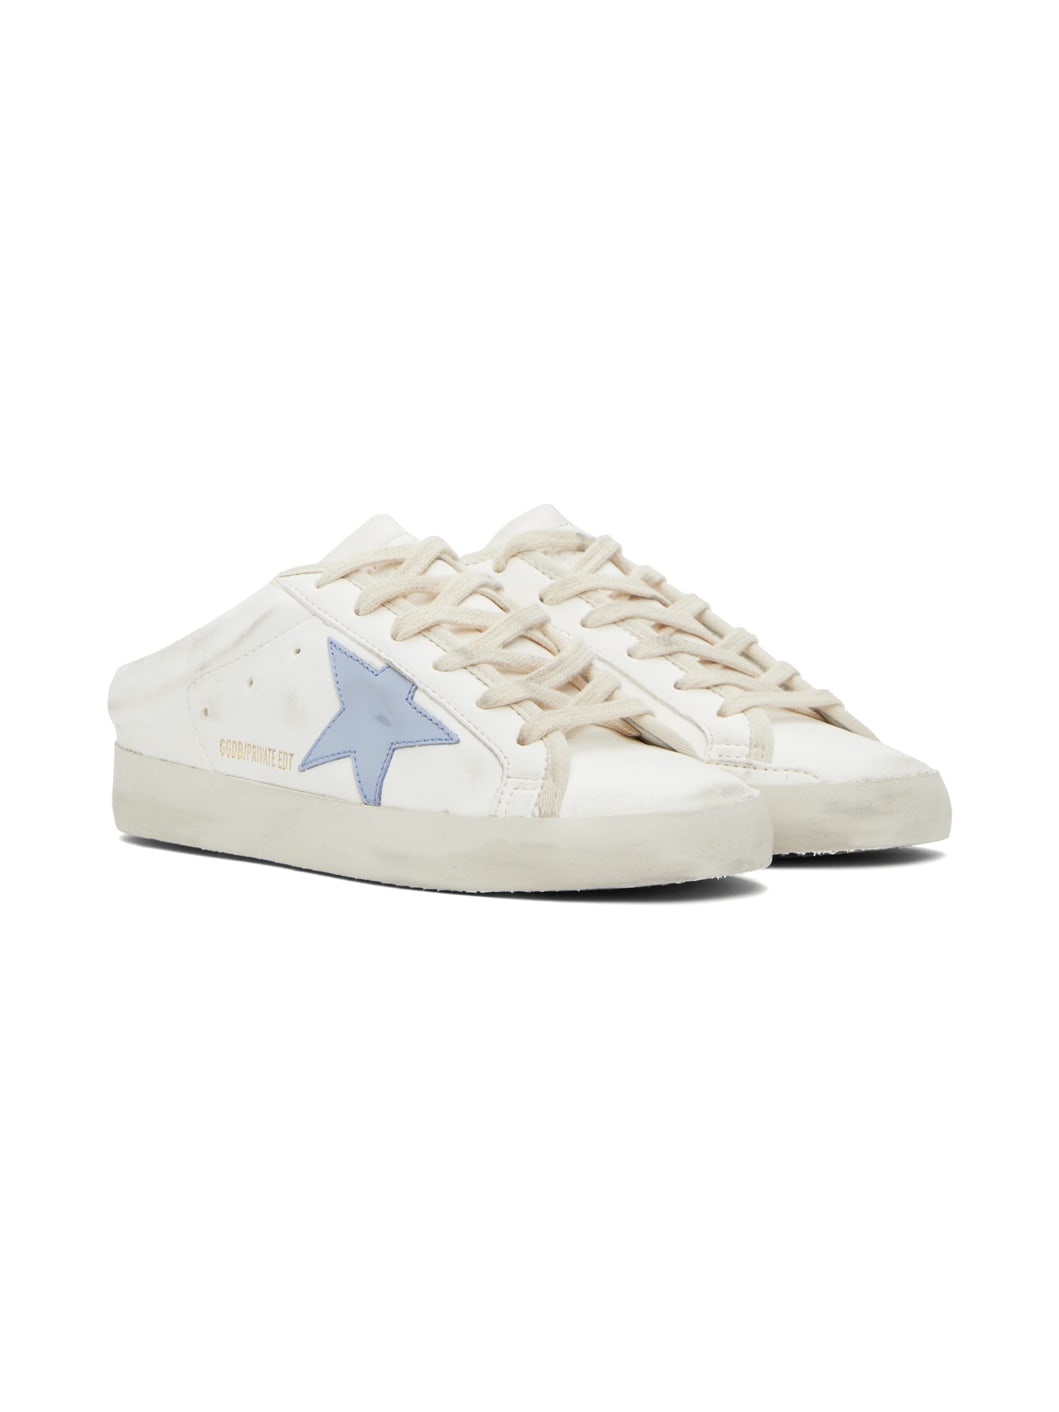 SSENSE Exclusive White & Blue Ball Star Sabot Sneakers - 4